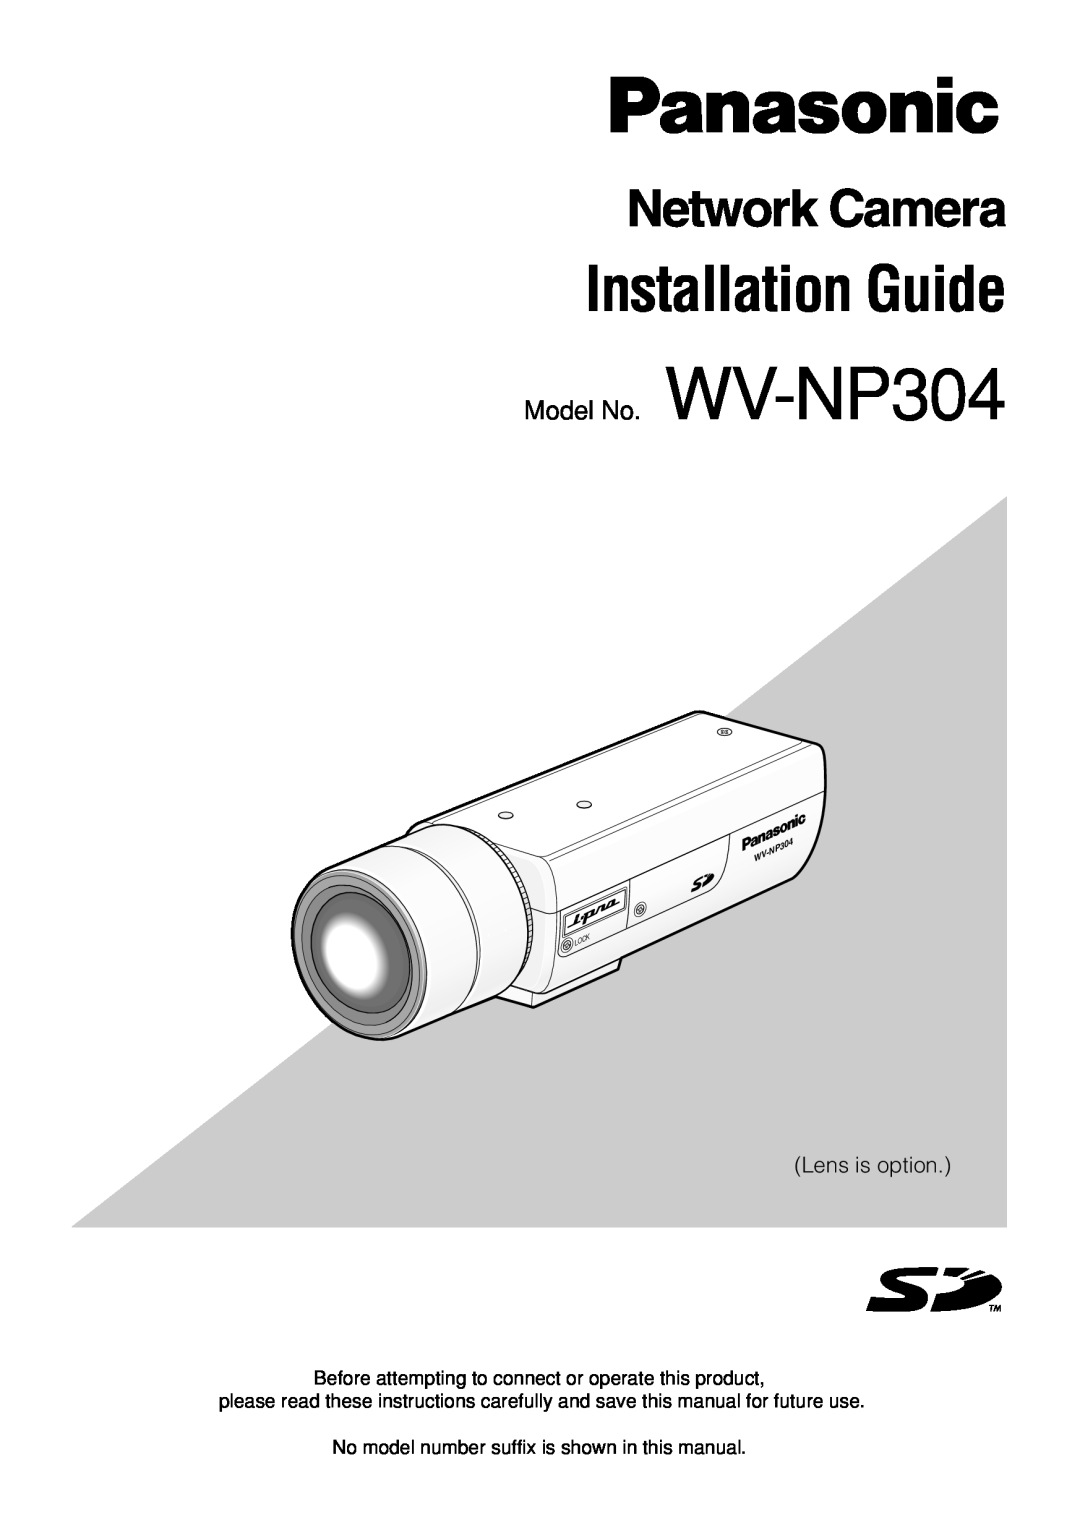 Panasonic manual Installation Guide, Network Camera, Model No. WV-NP304 